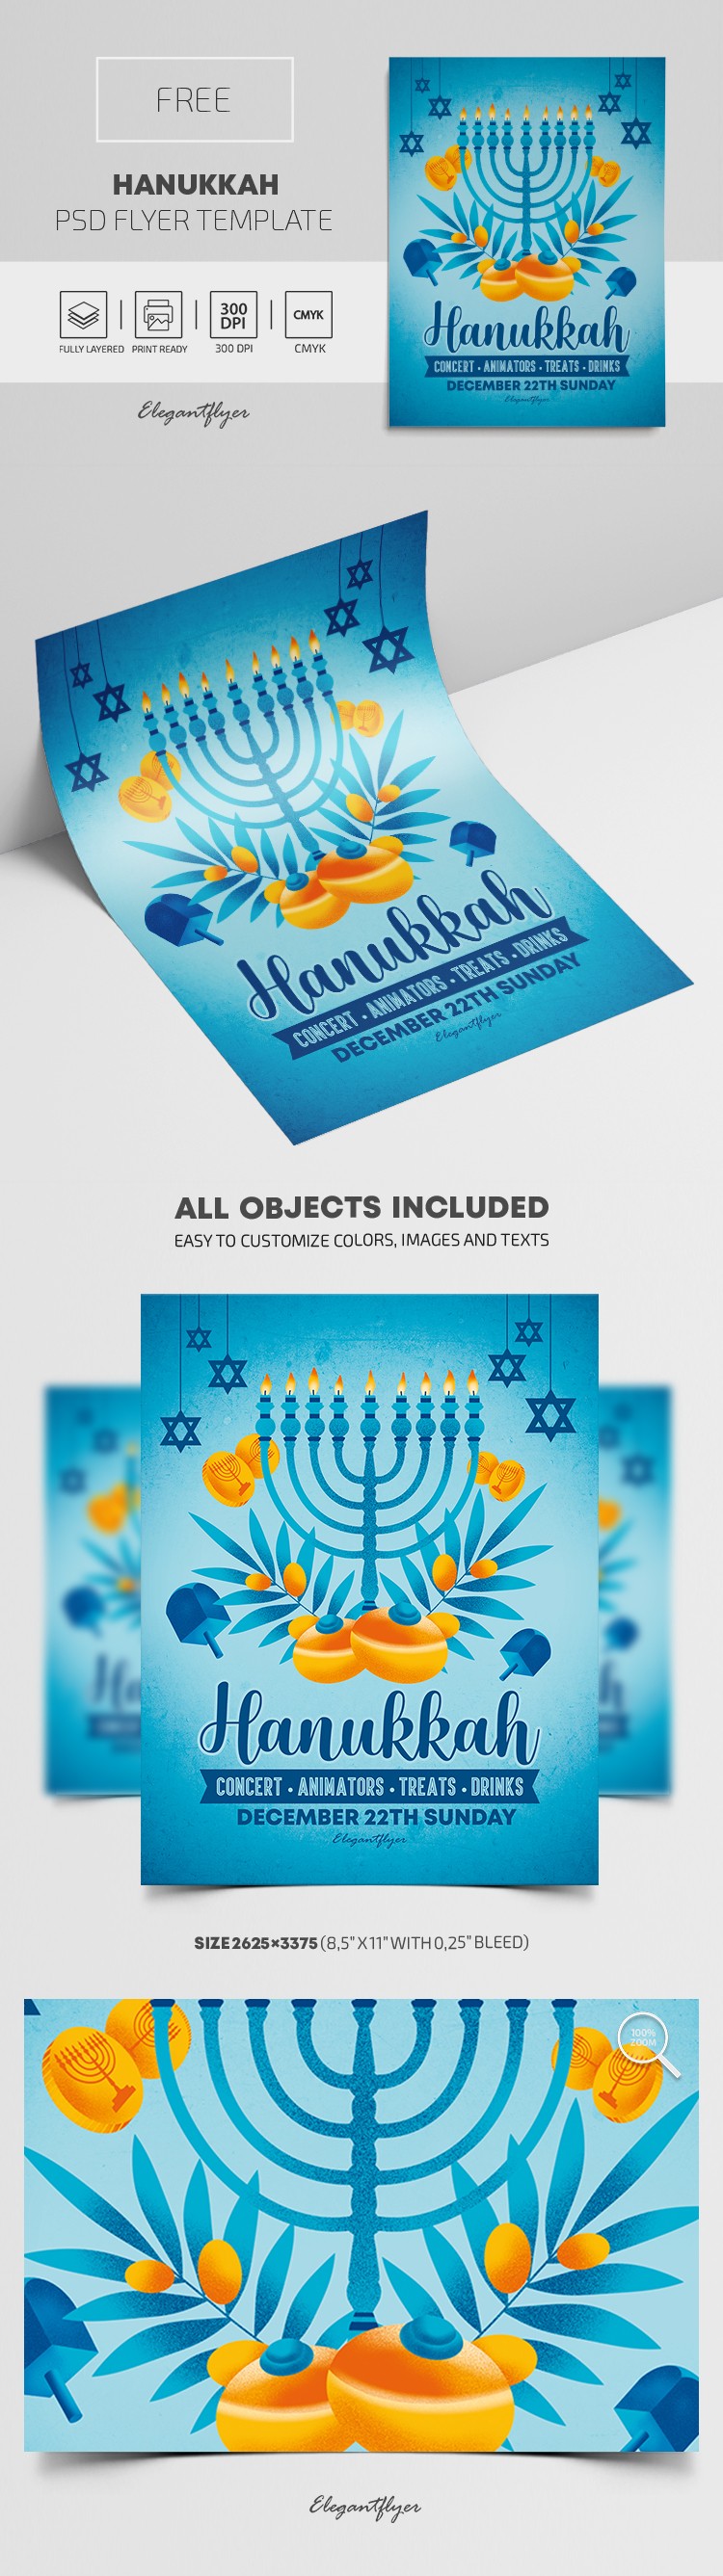 Folleto de Hanukkah by ElegantFlyer